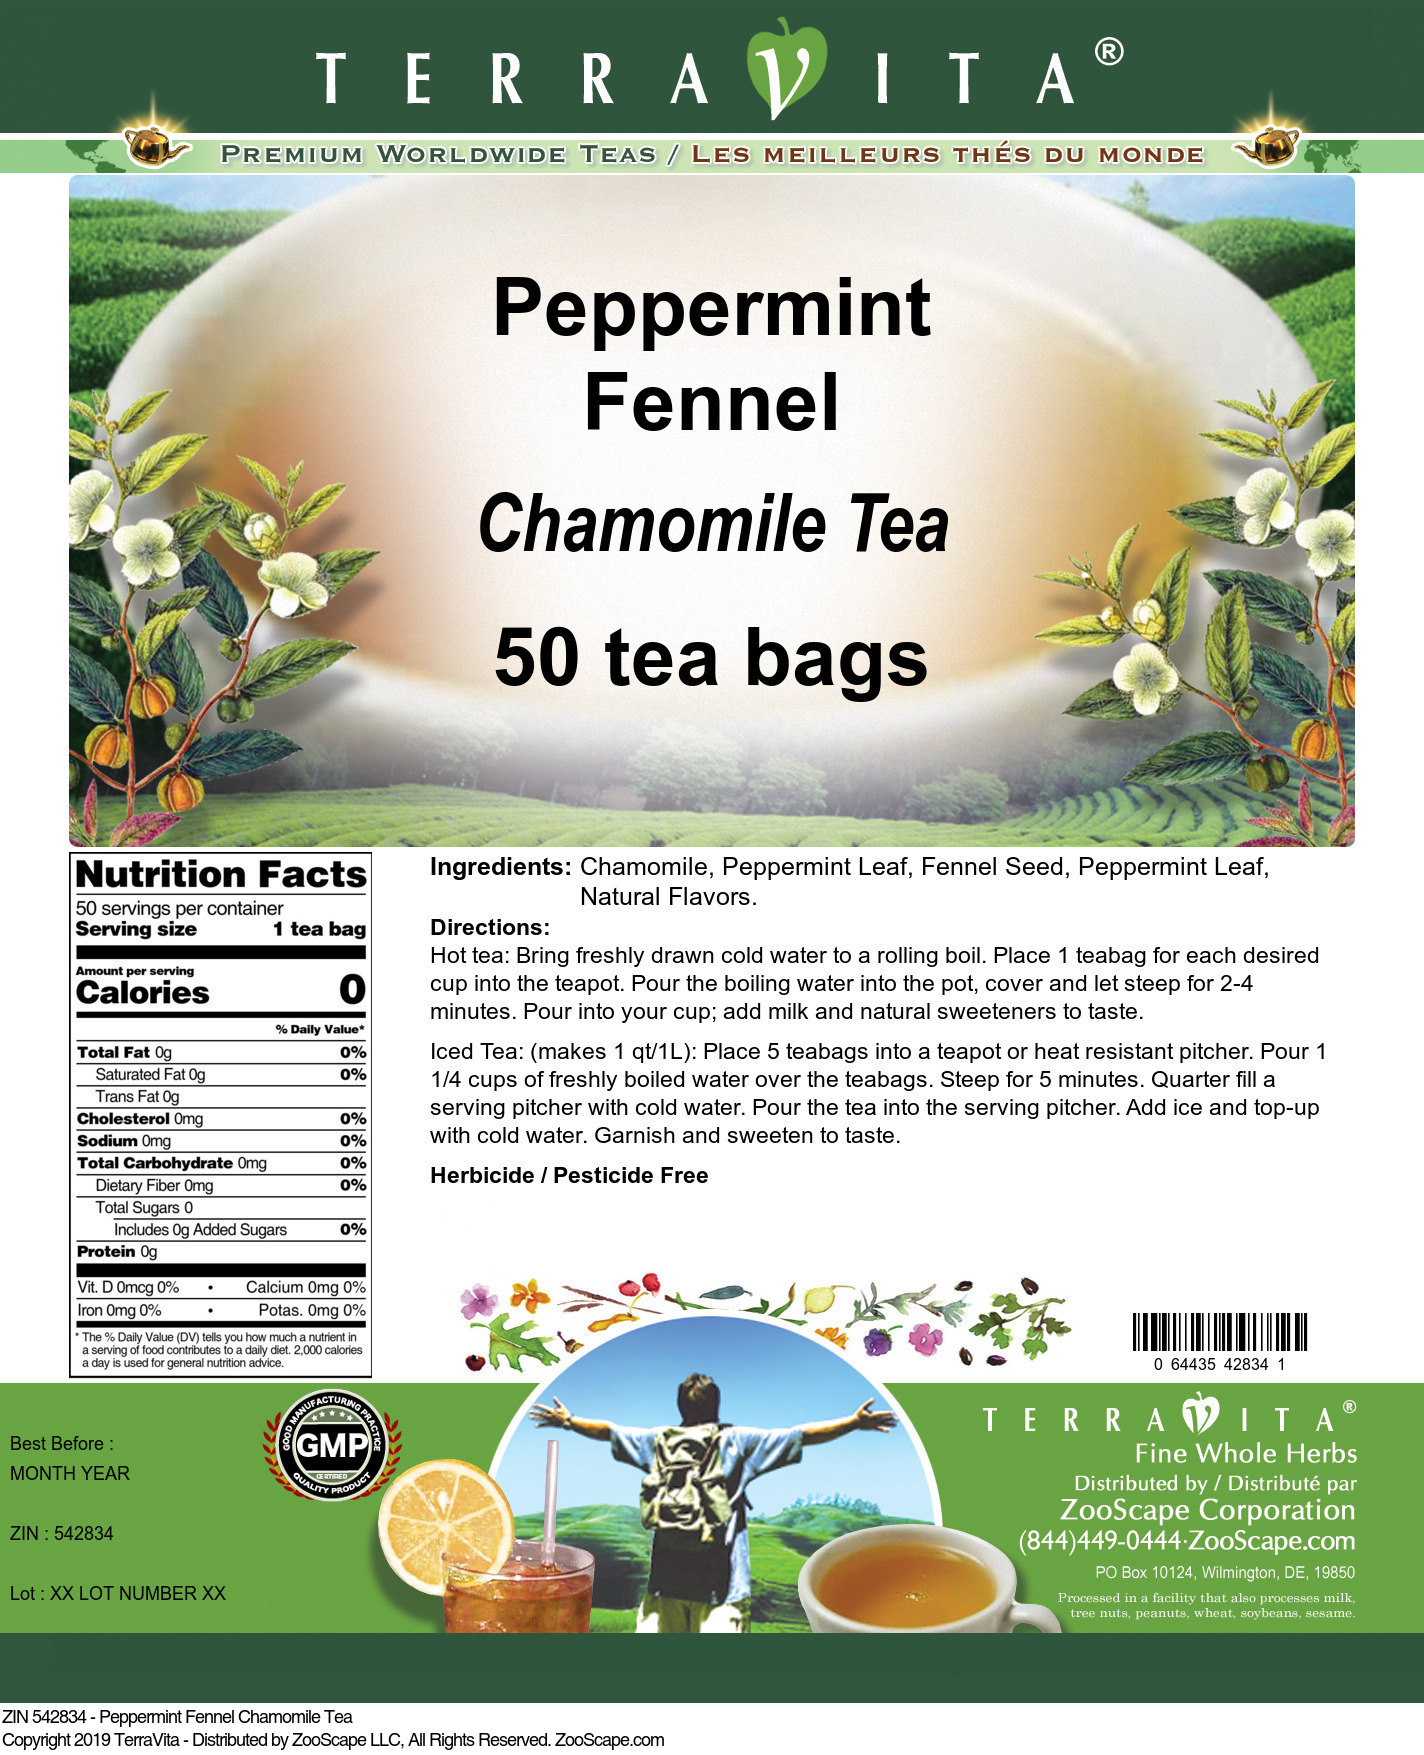 Peppermint Fennel Chamomile Tea - Label